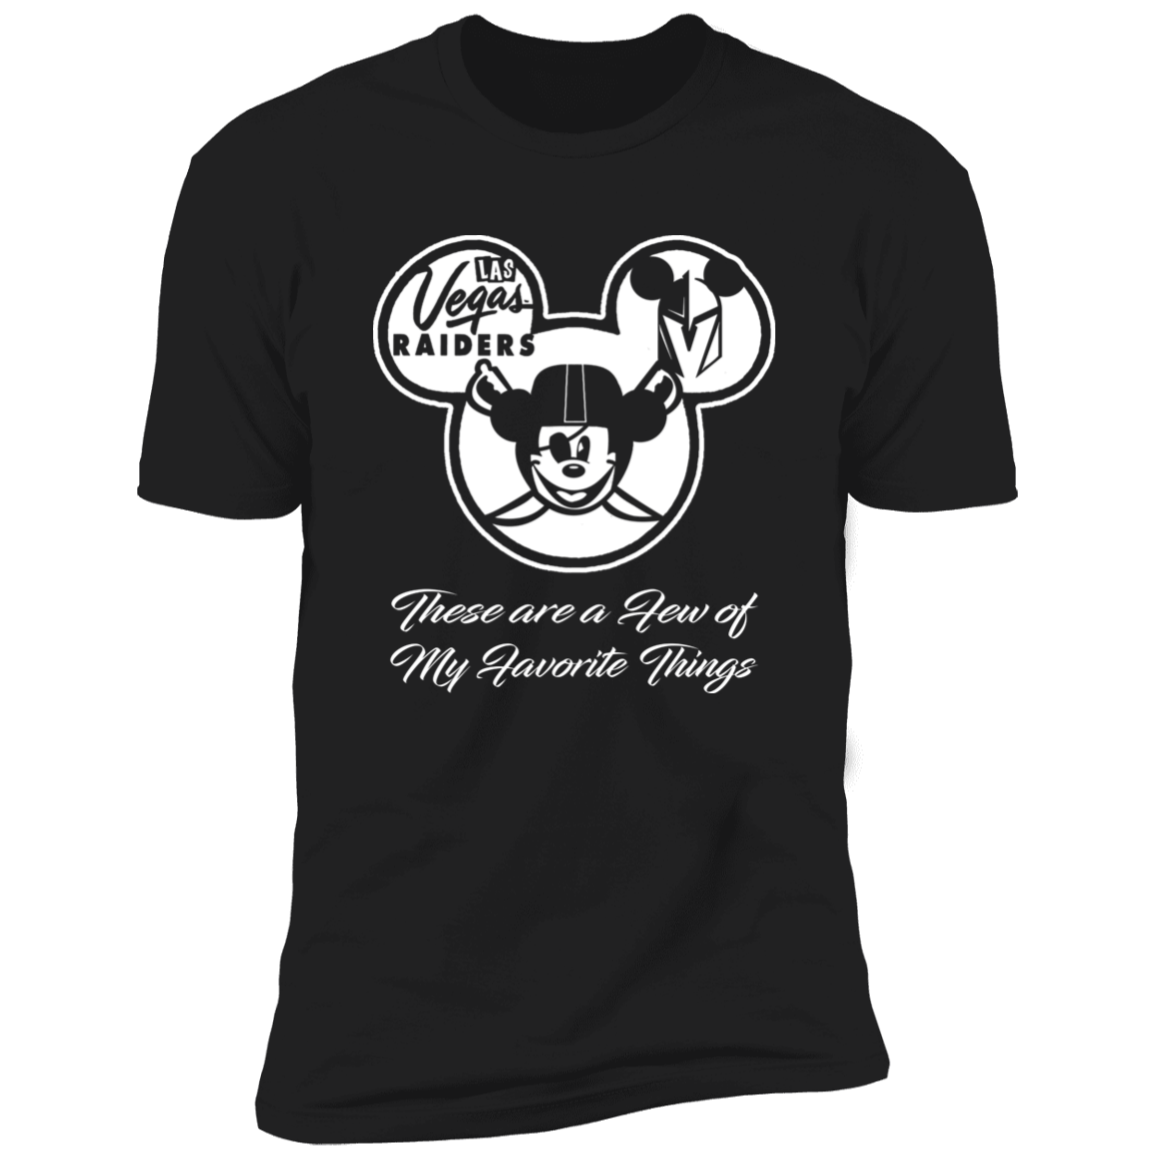 ArtichokeUSA Custom Design. Las Vegas Raiders & Mickey Mouse Mash Up. Fan Art. Parody. Men's Premium Short Sleeve T-Shirt